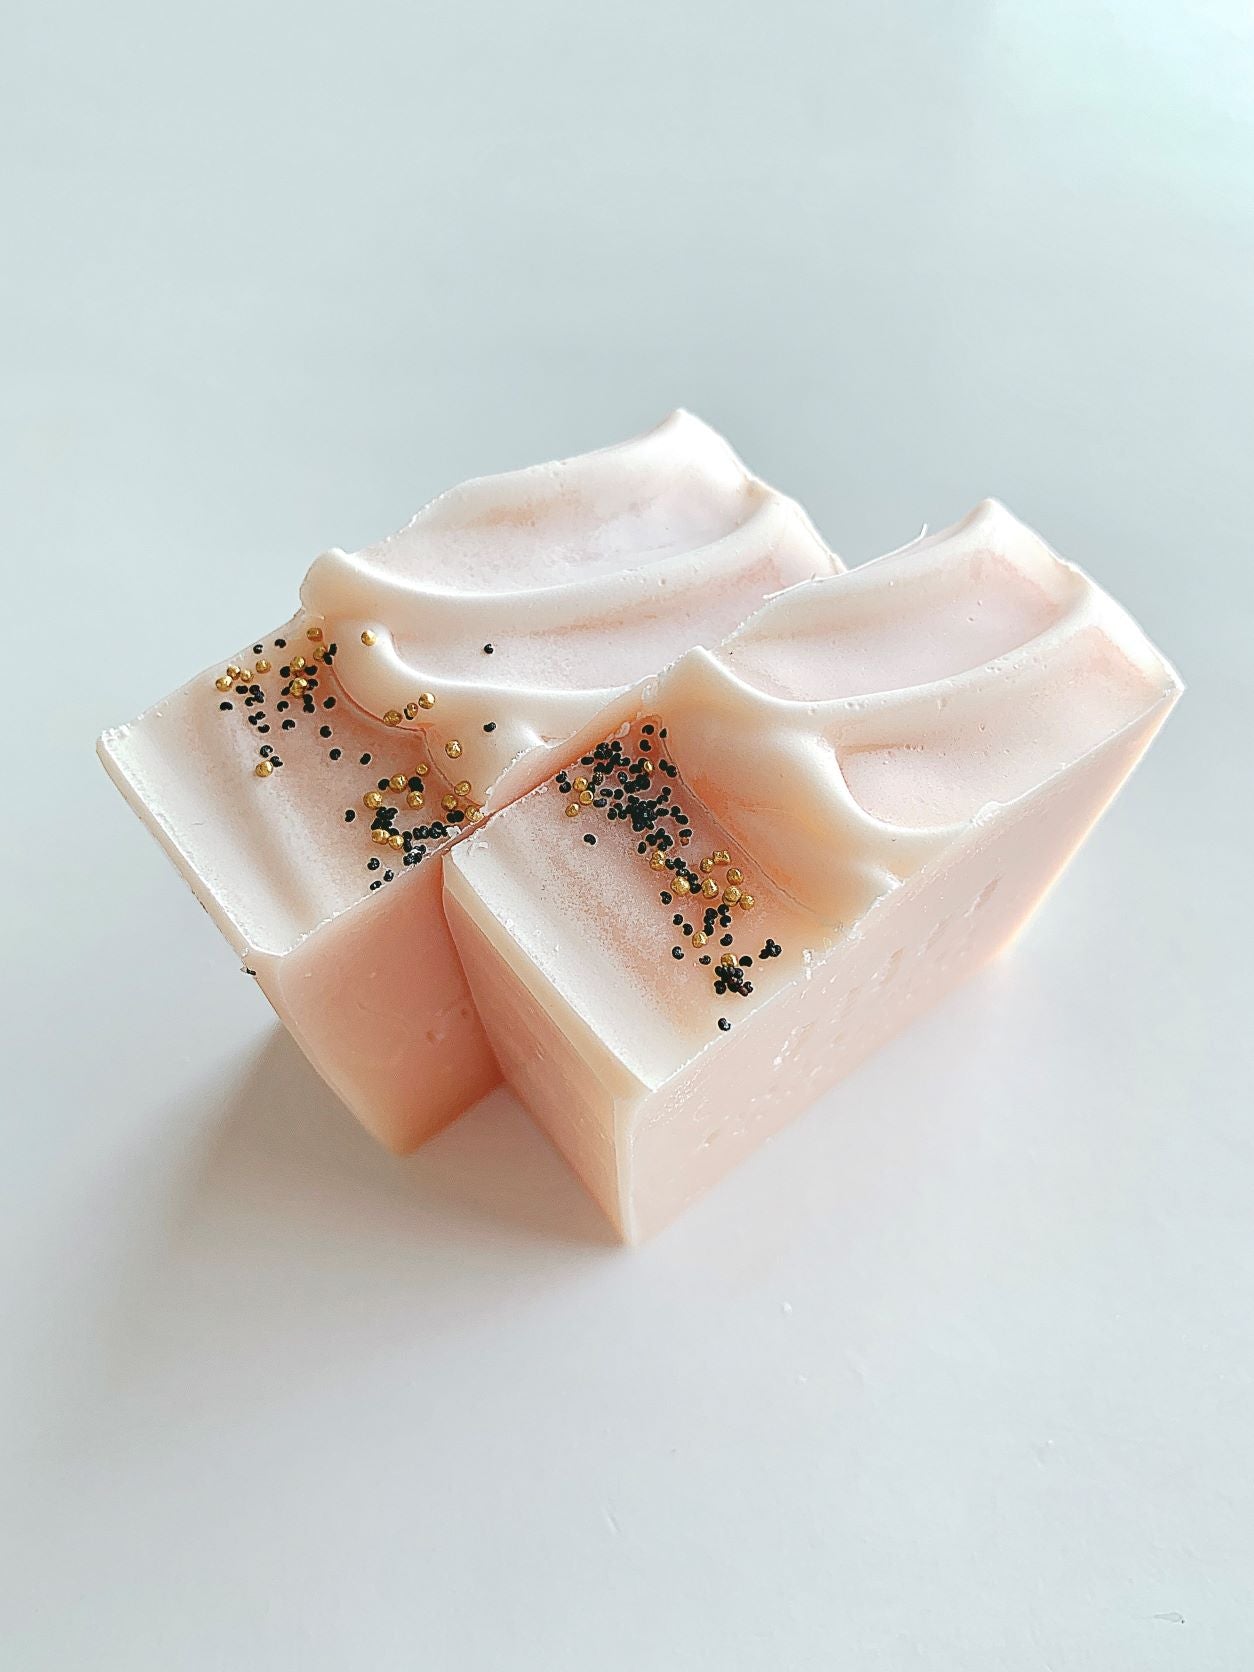 Japanese Cherry Blossom Soap